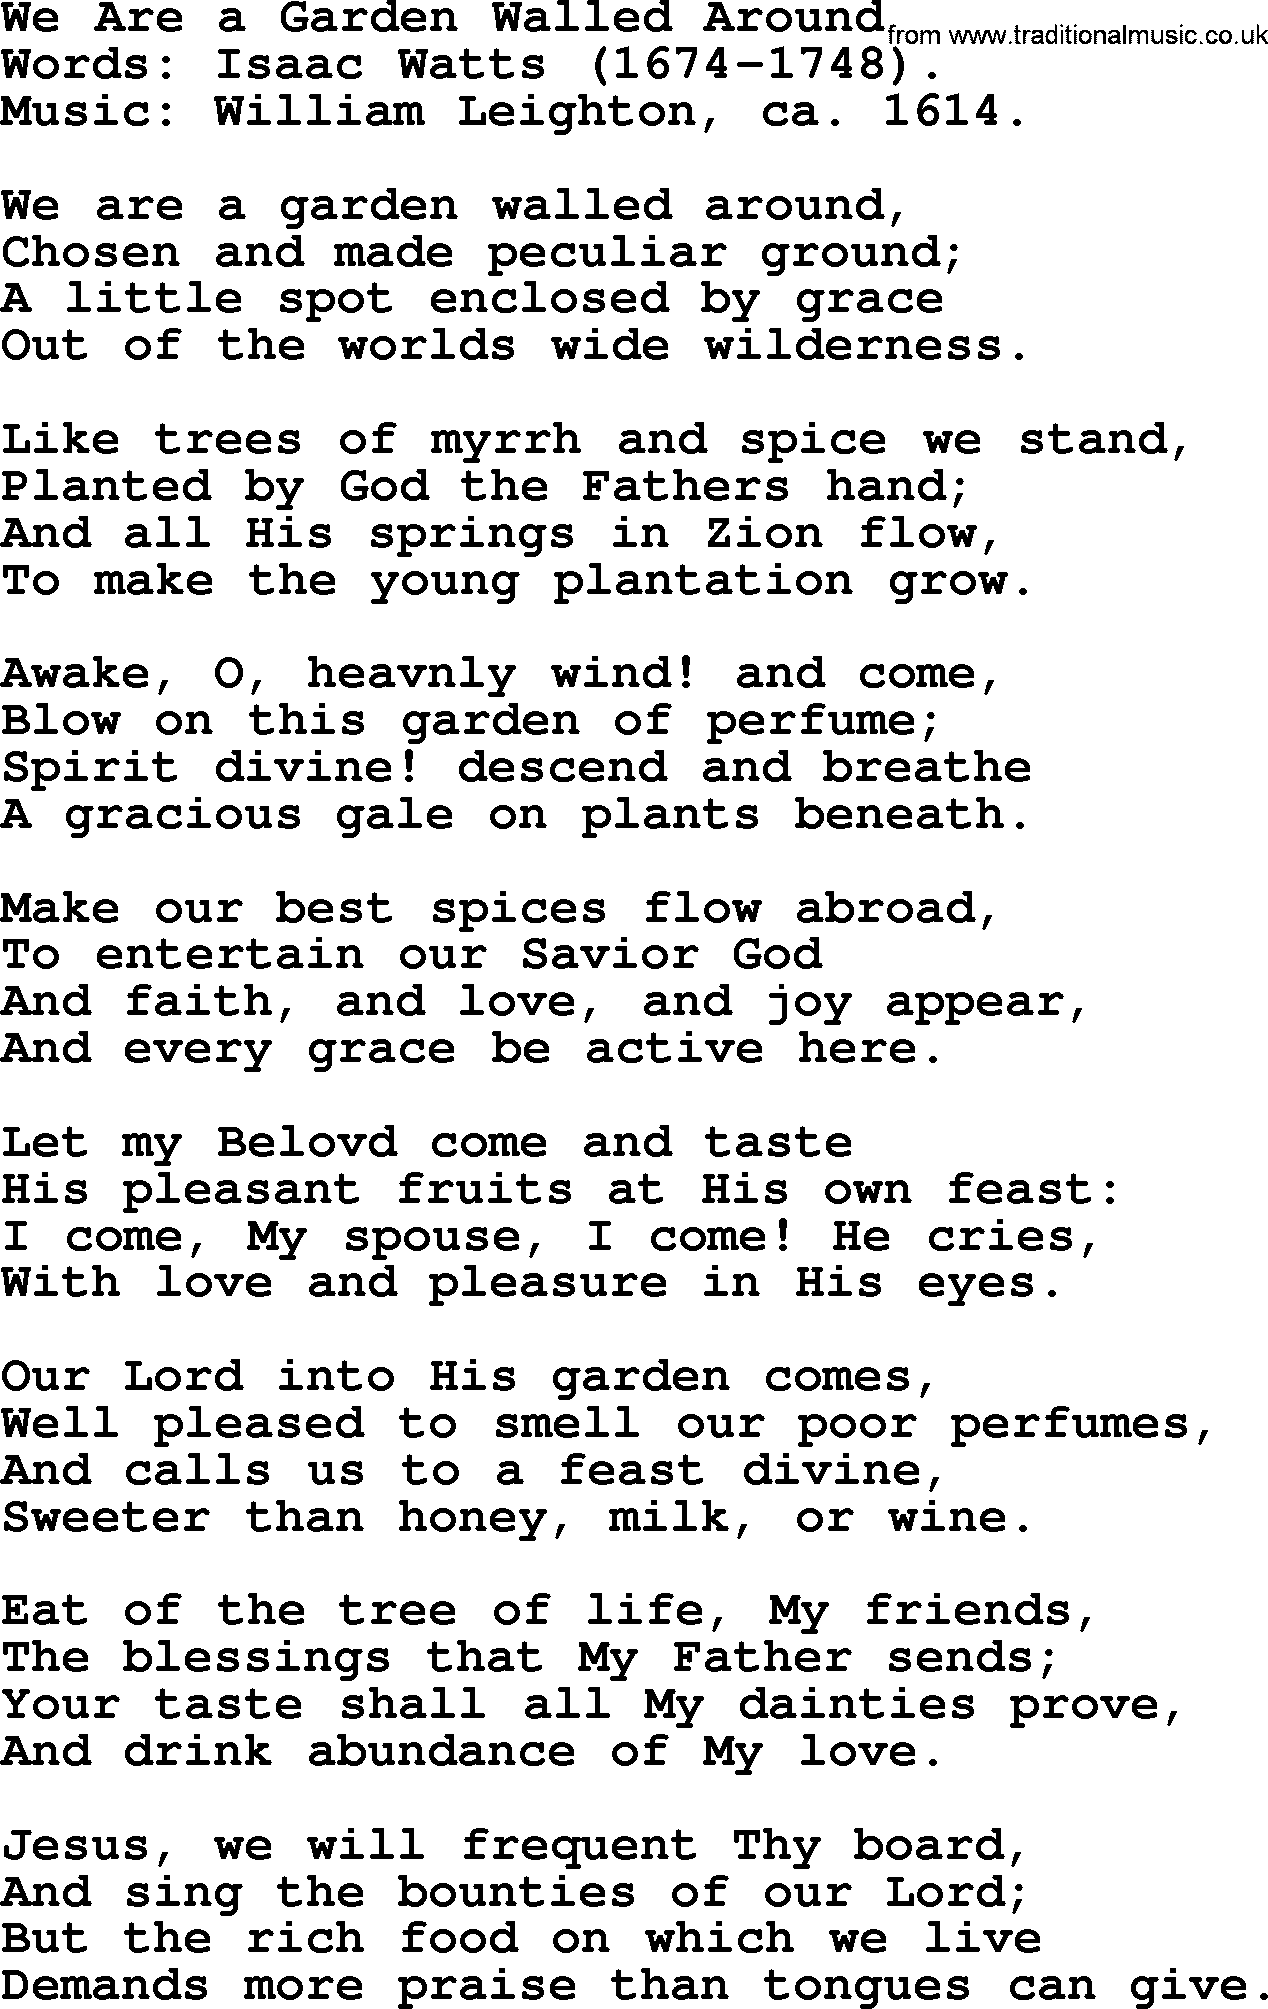 Isaac Watts Christian hymn: We Are a Garden Walled Around- lyricss